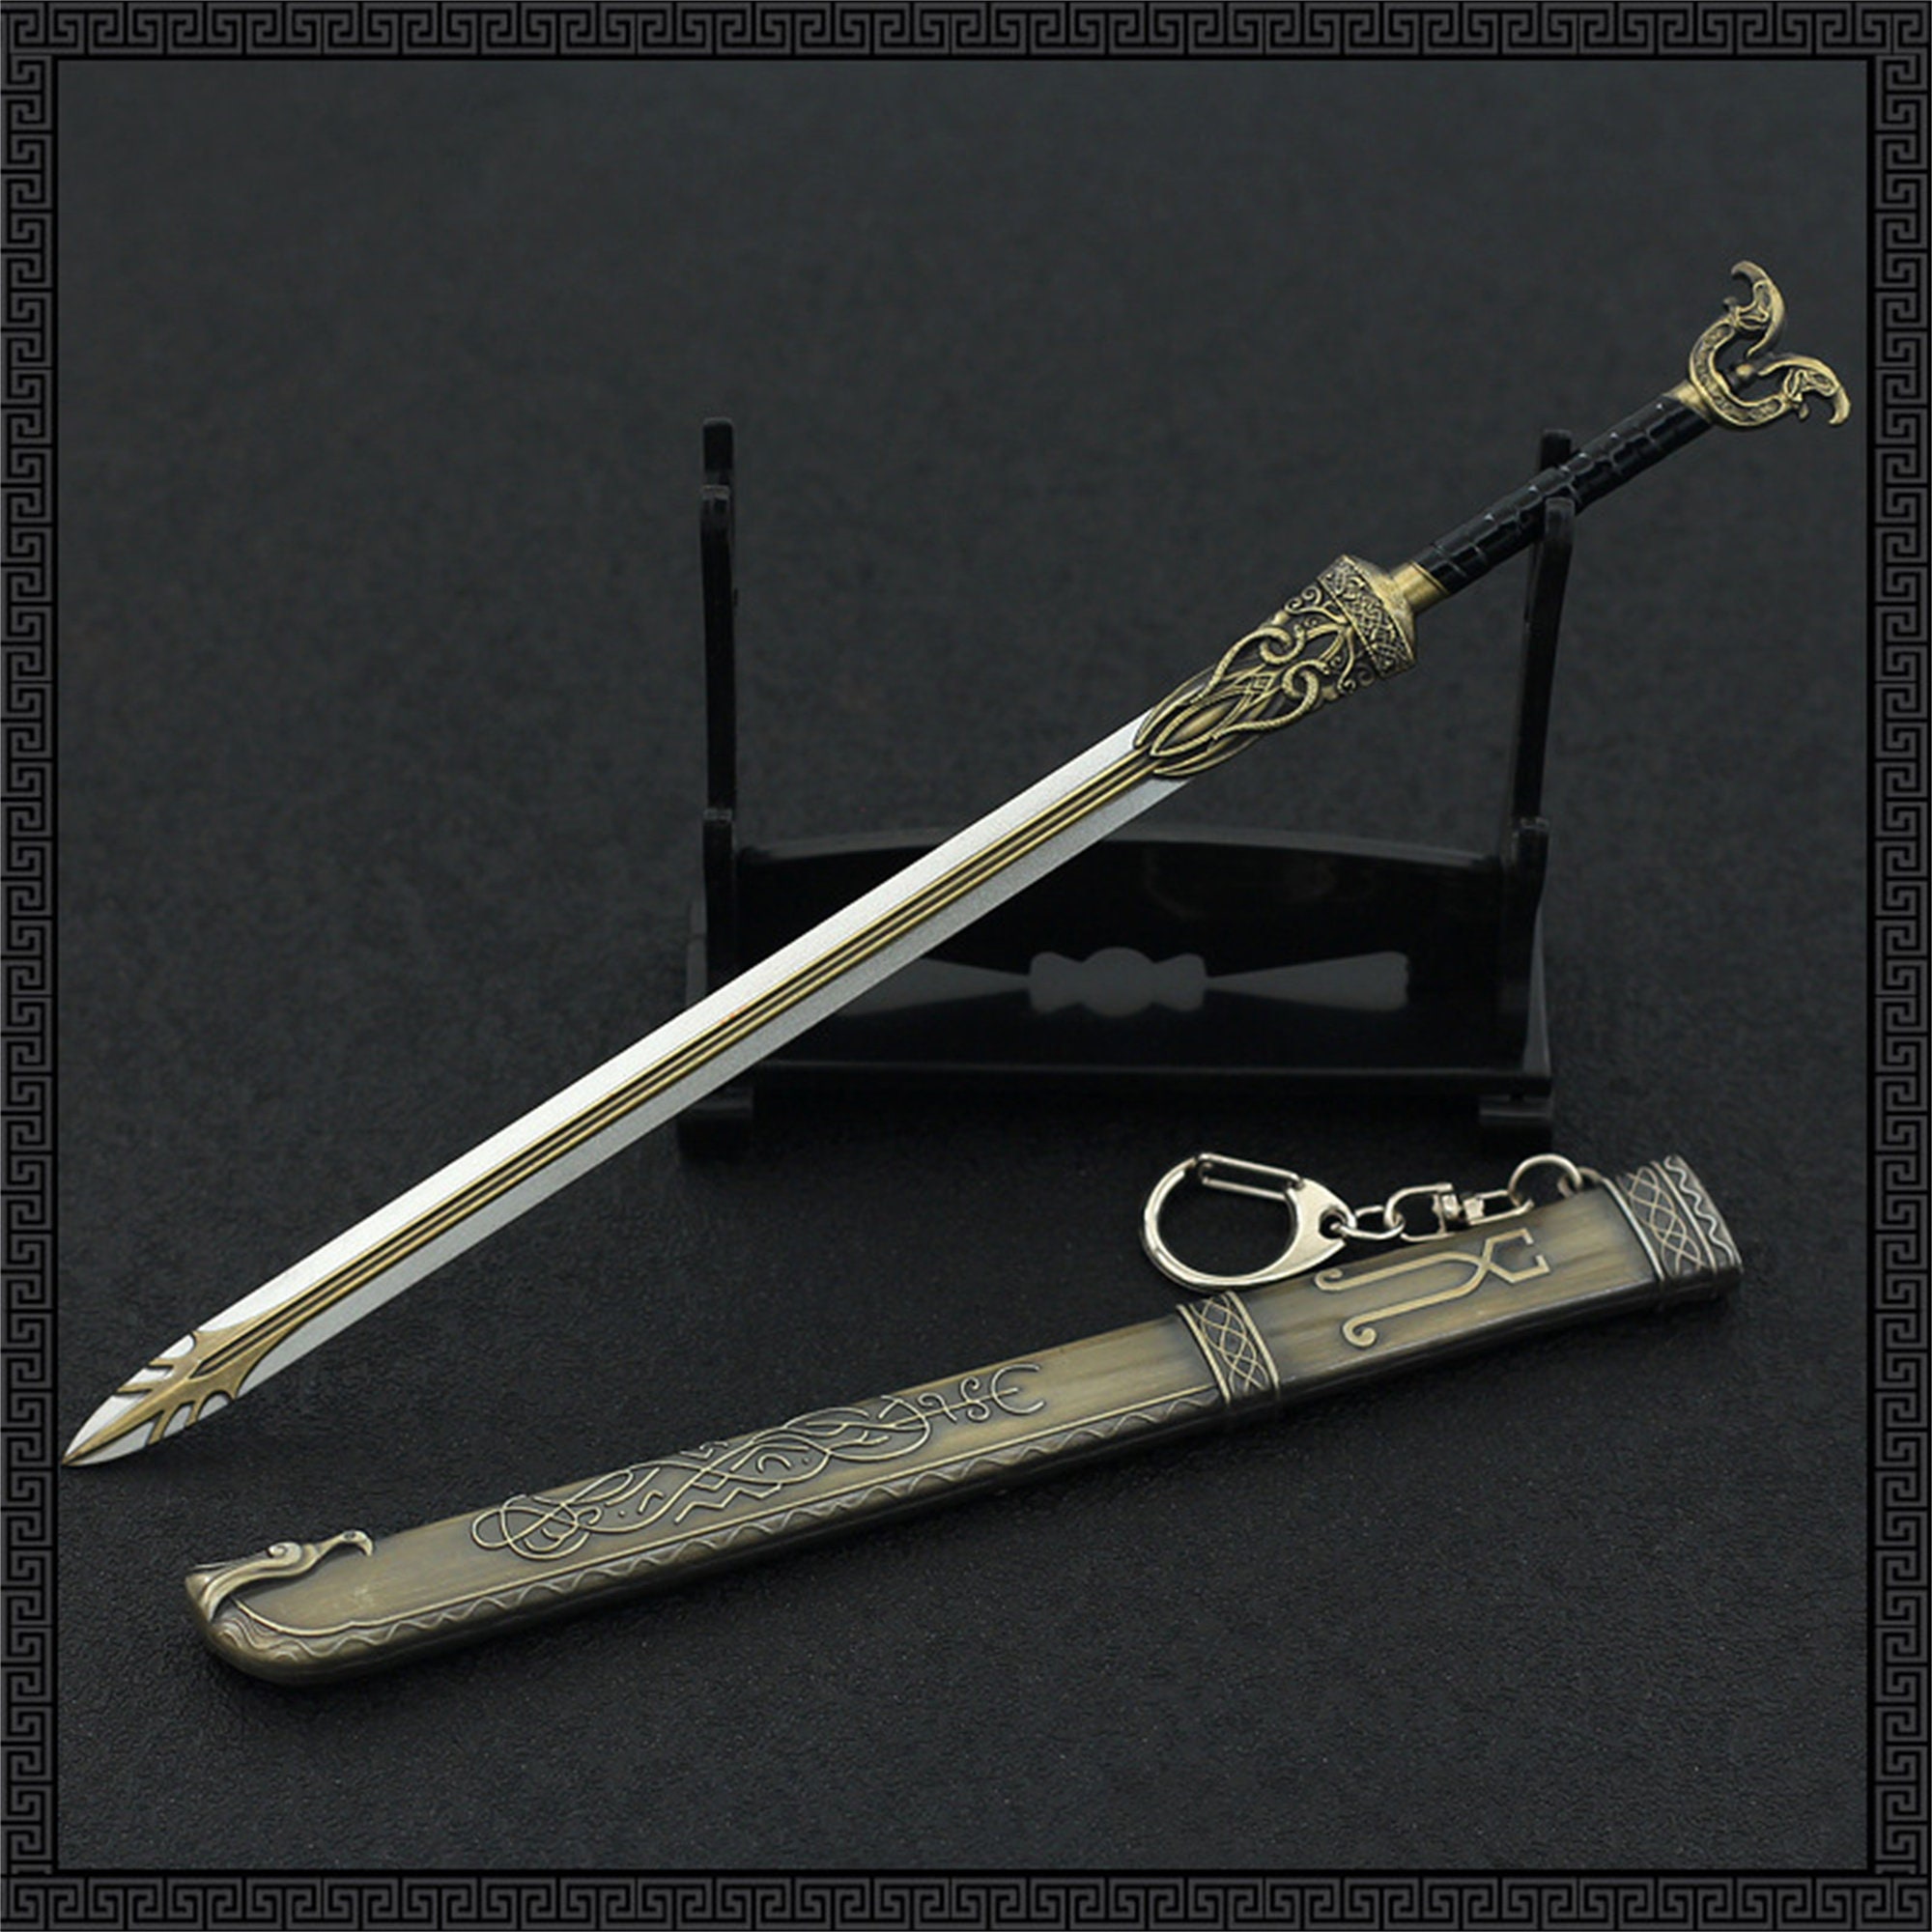 God of War sword of Olympus pendant keychain sterling silver 925